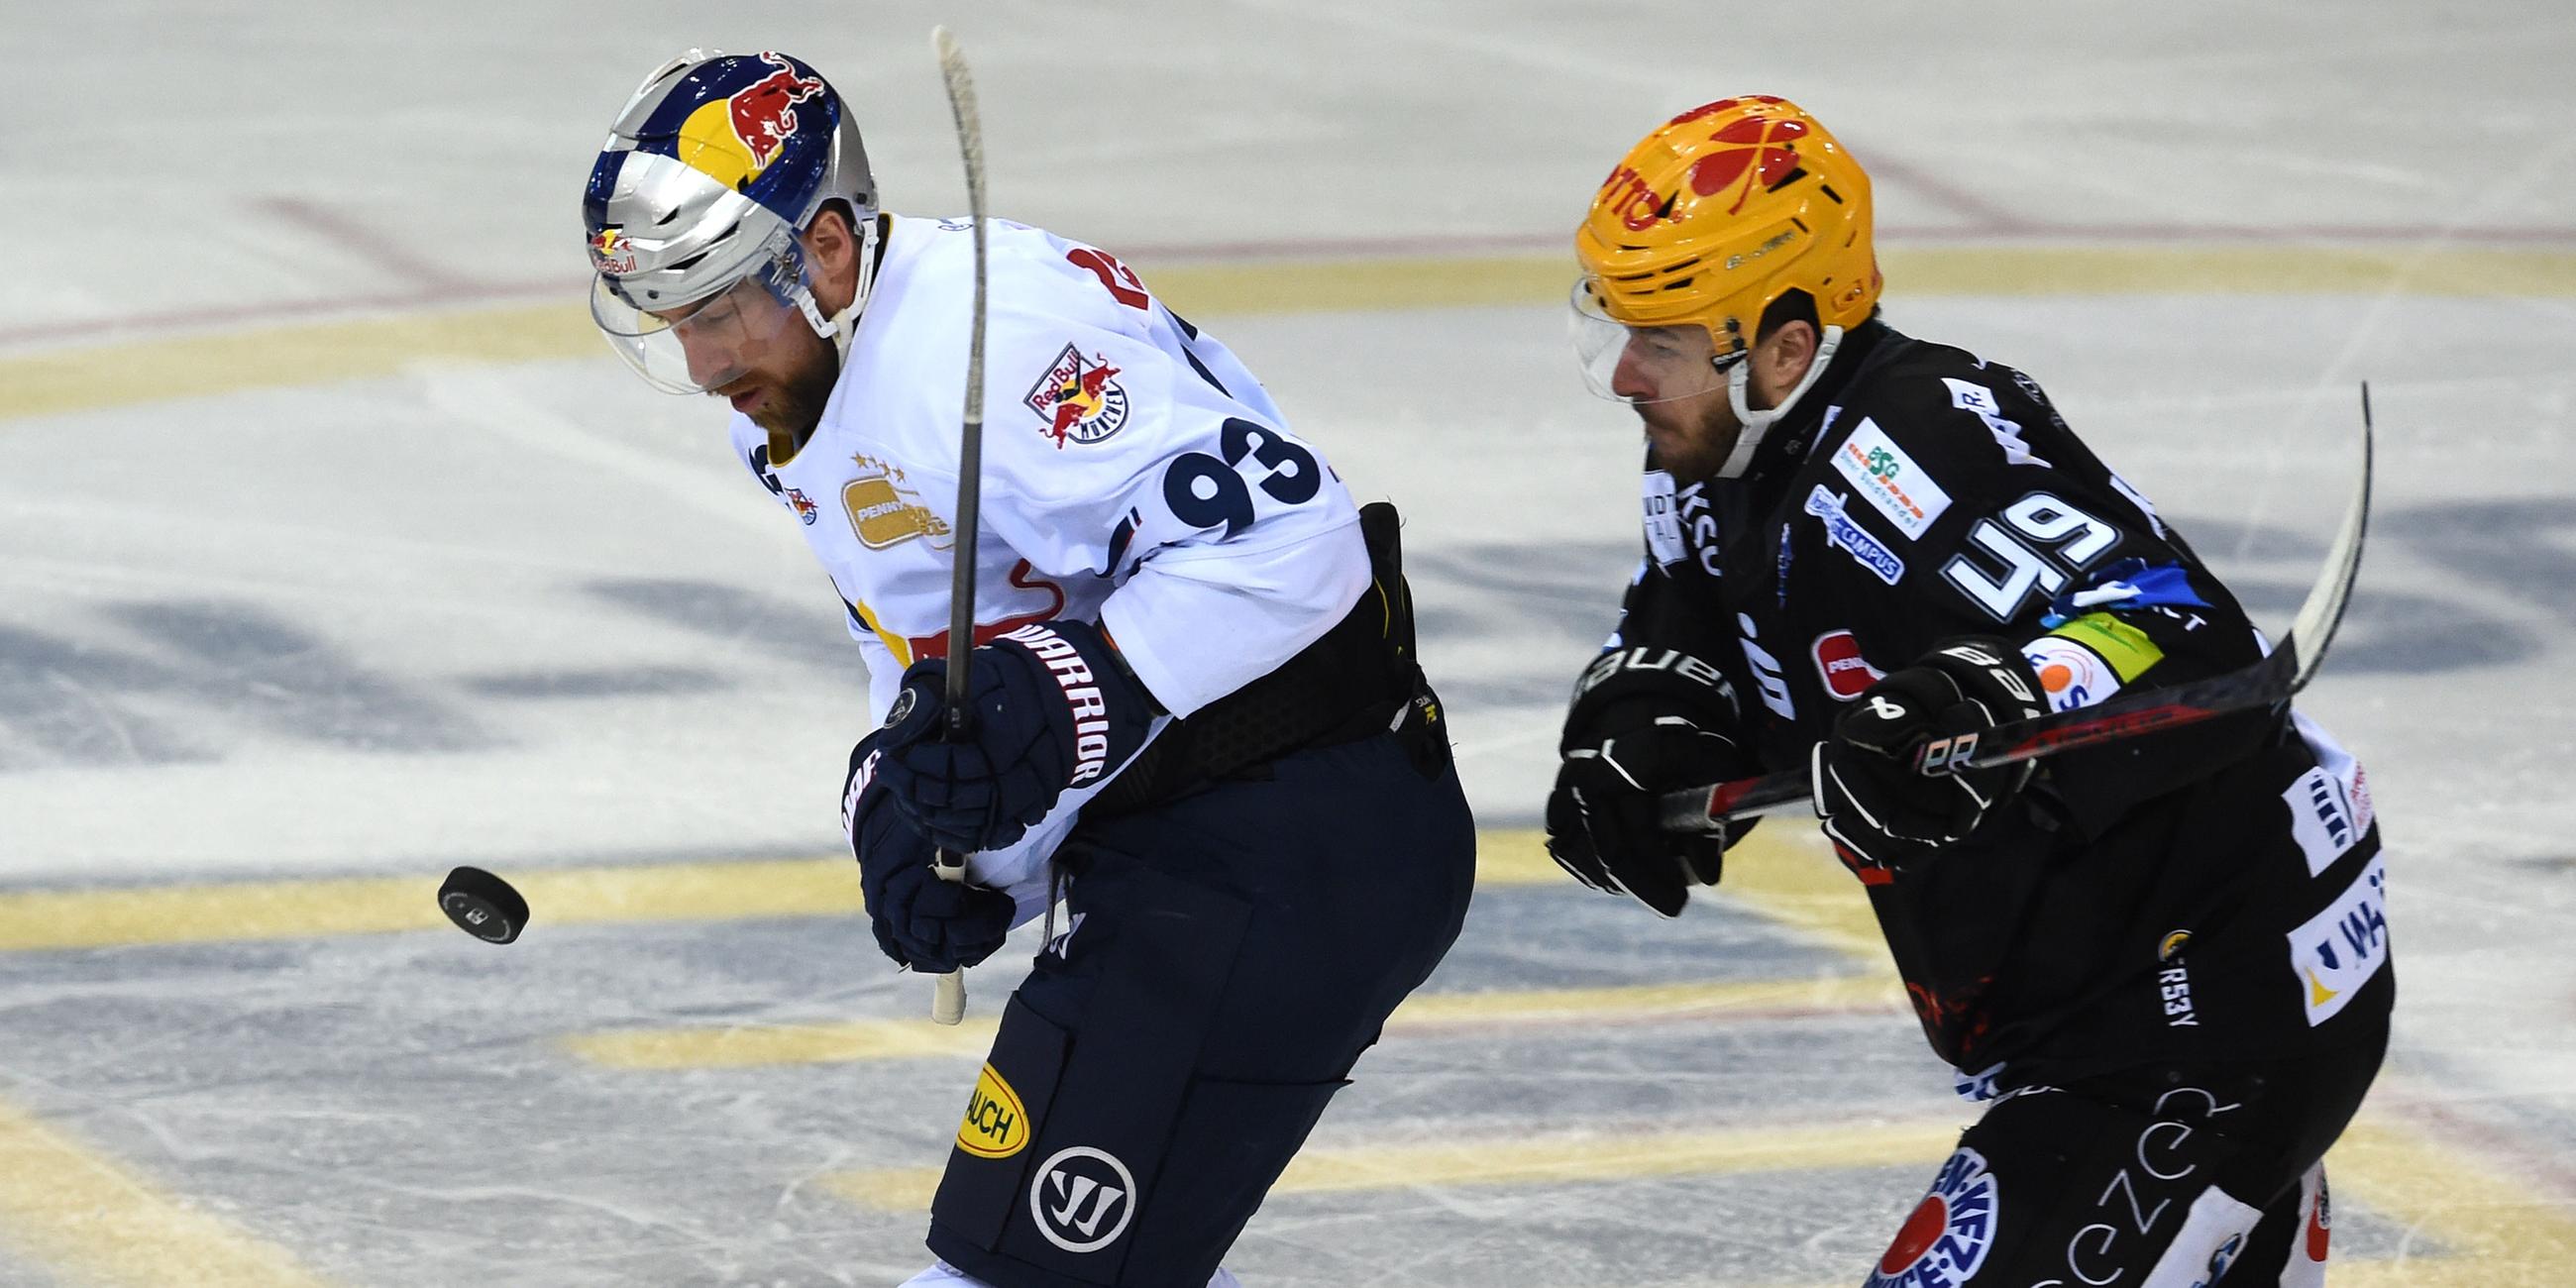 Eishockey-Spieler Lukas Kälble (rechts im Bild) kämpft mit Maximilian Kastner um den Puck.